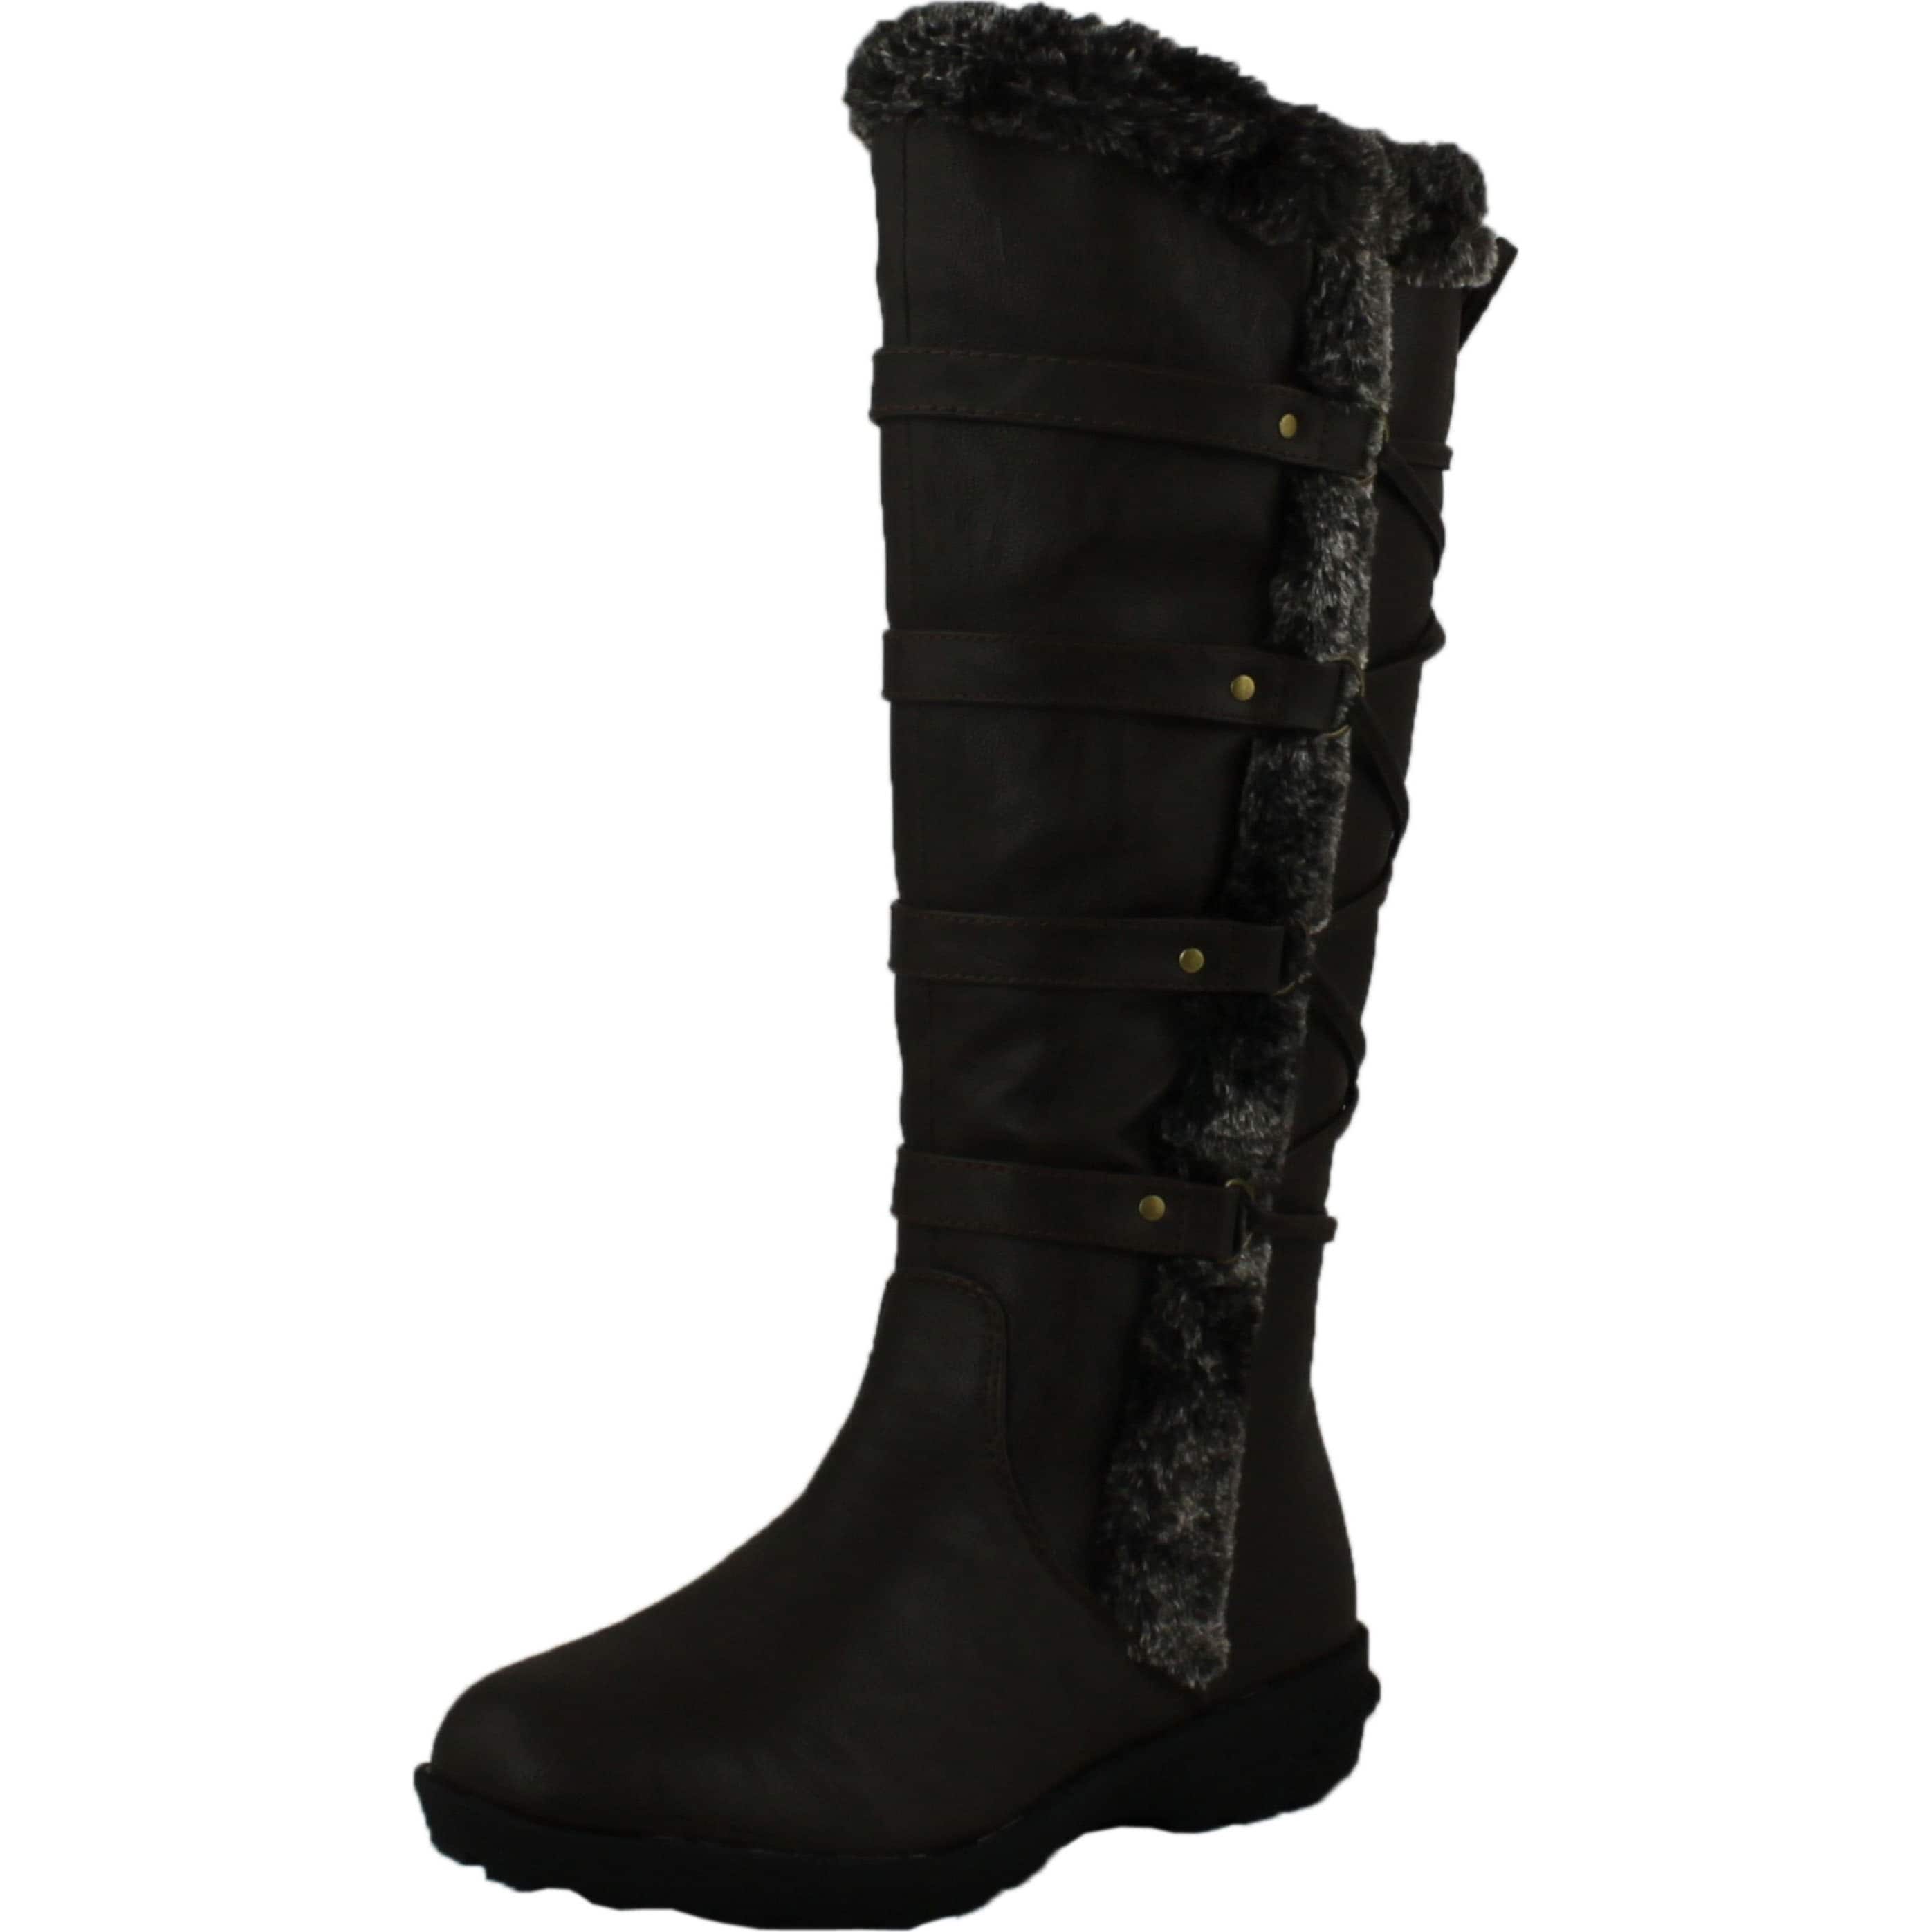 knee high black winter boots